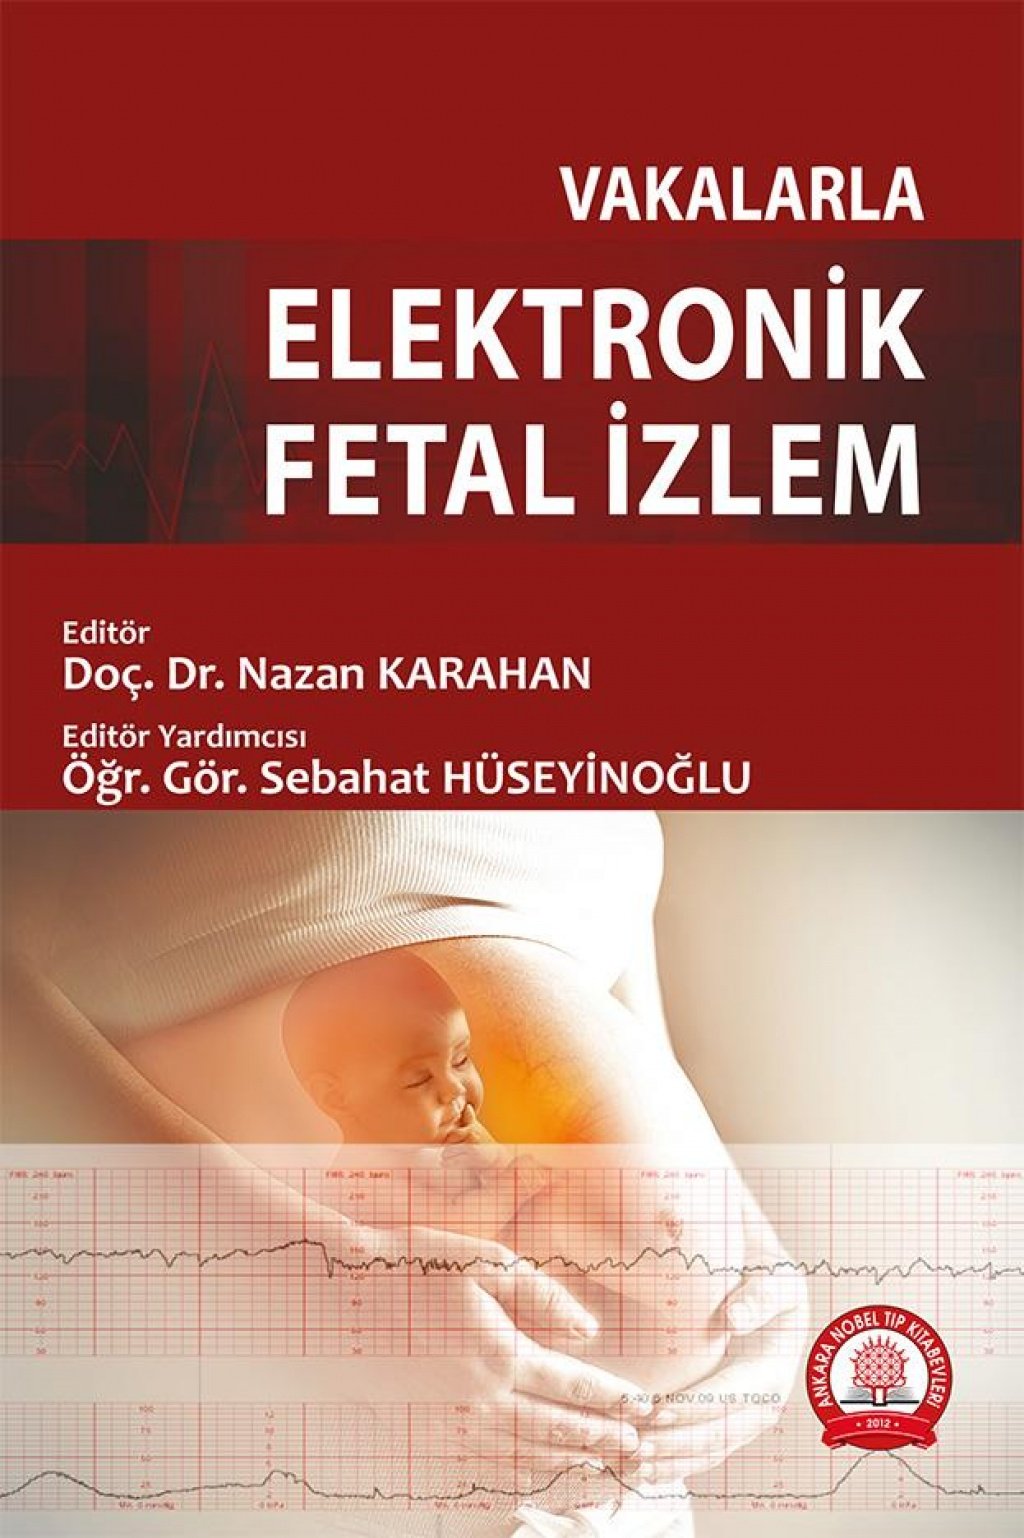 Vakalarla Elektronik Fetal İzlem